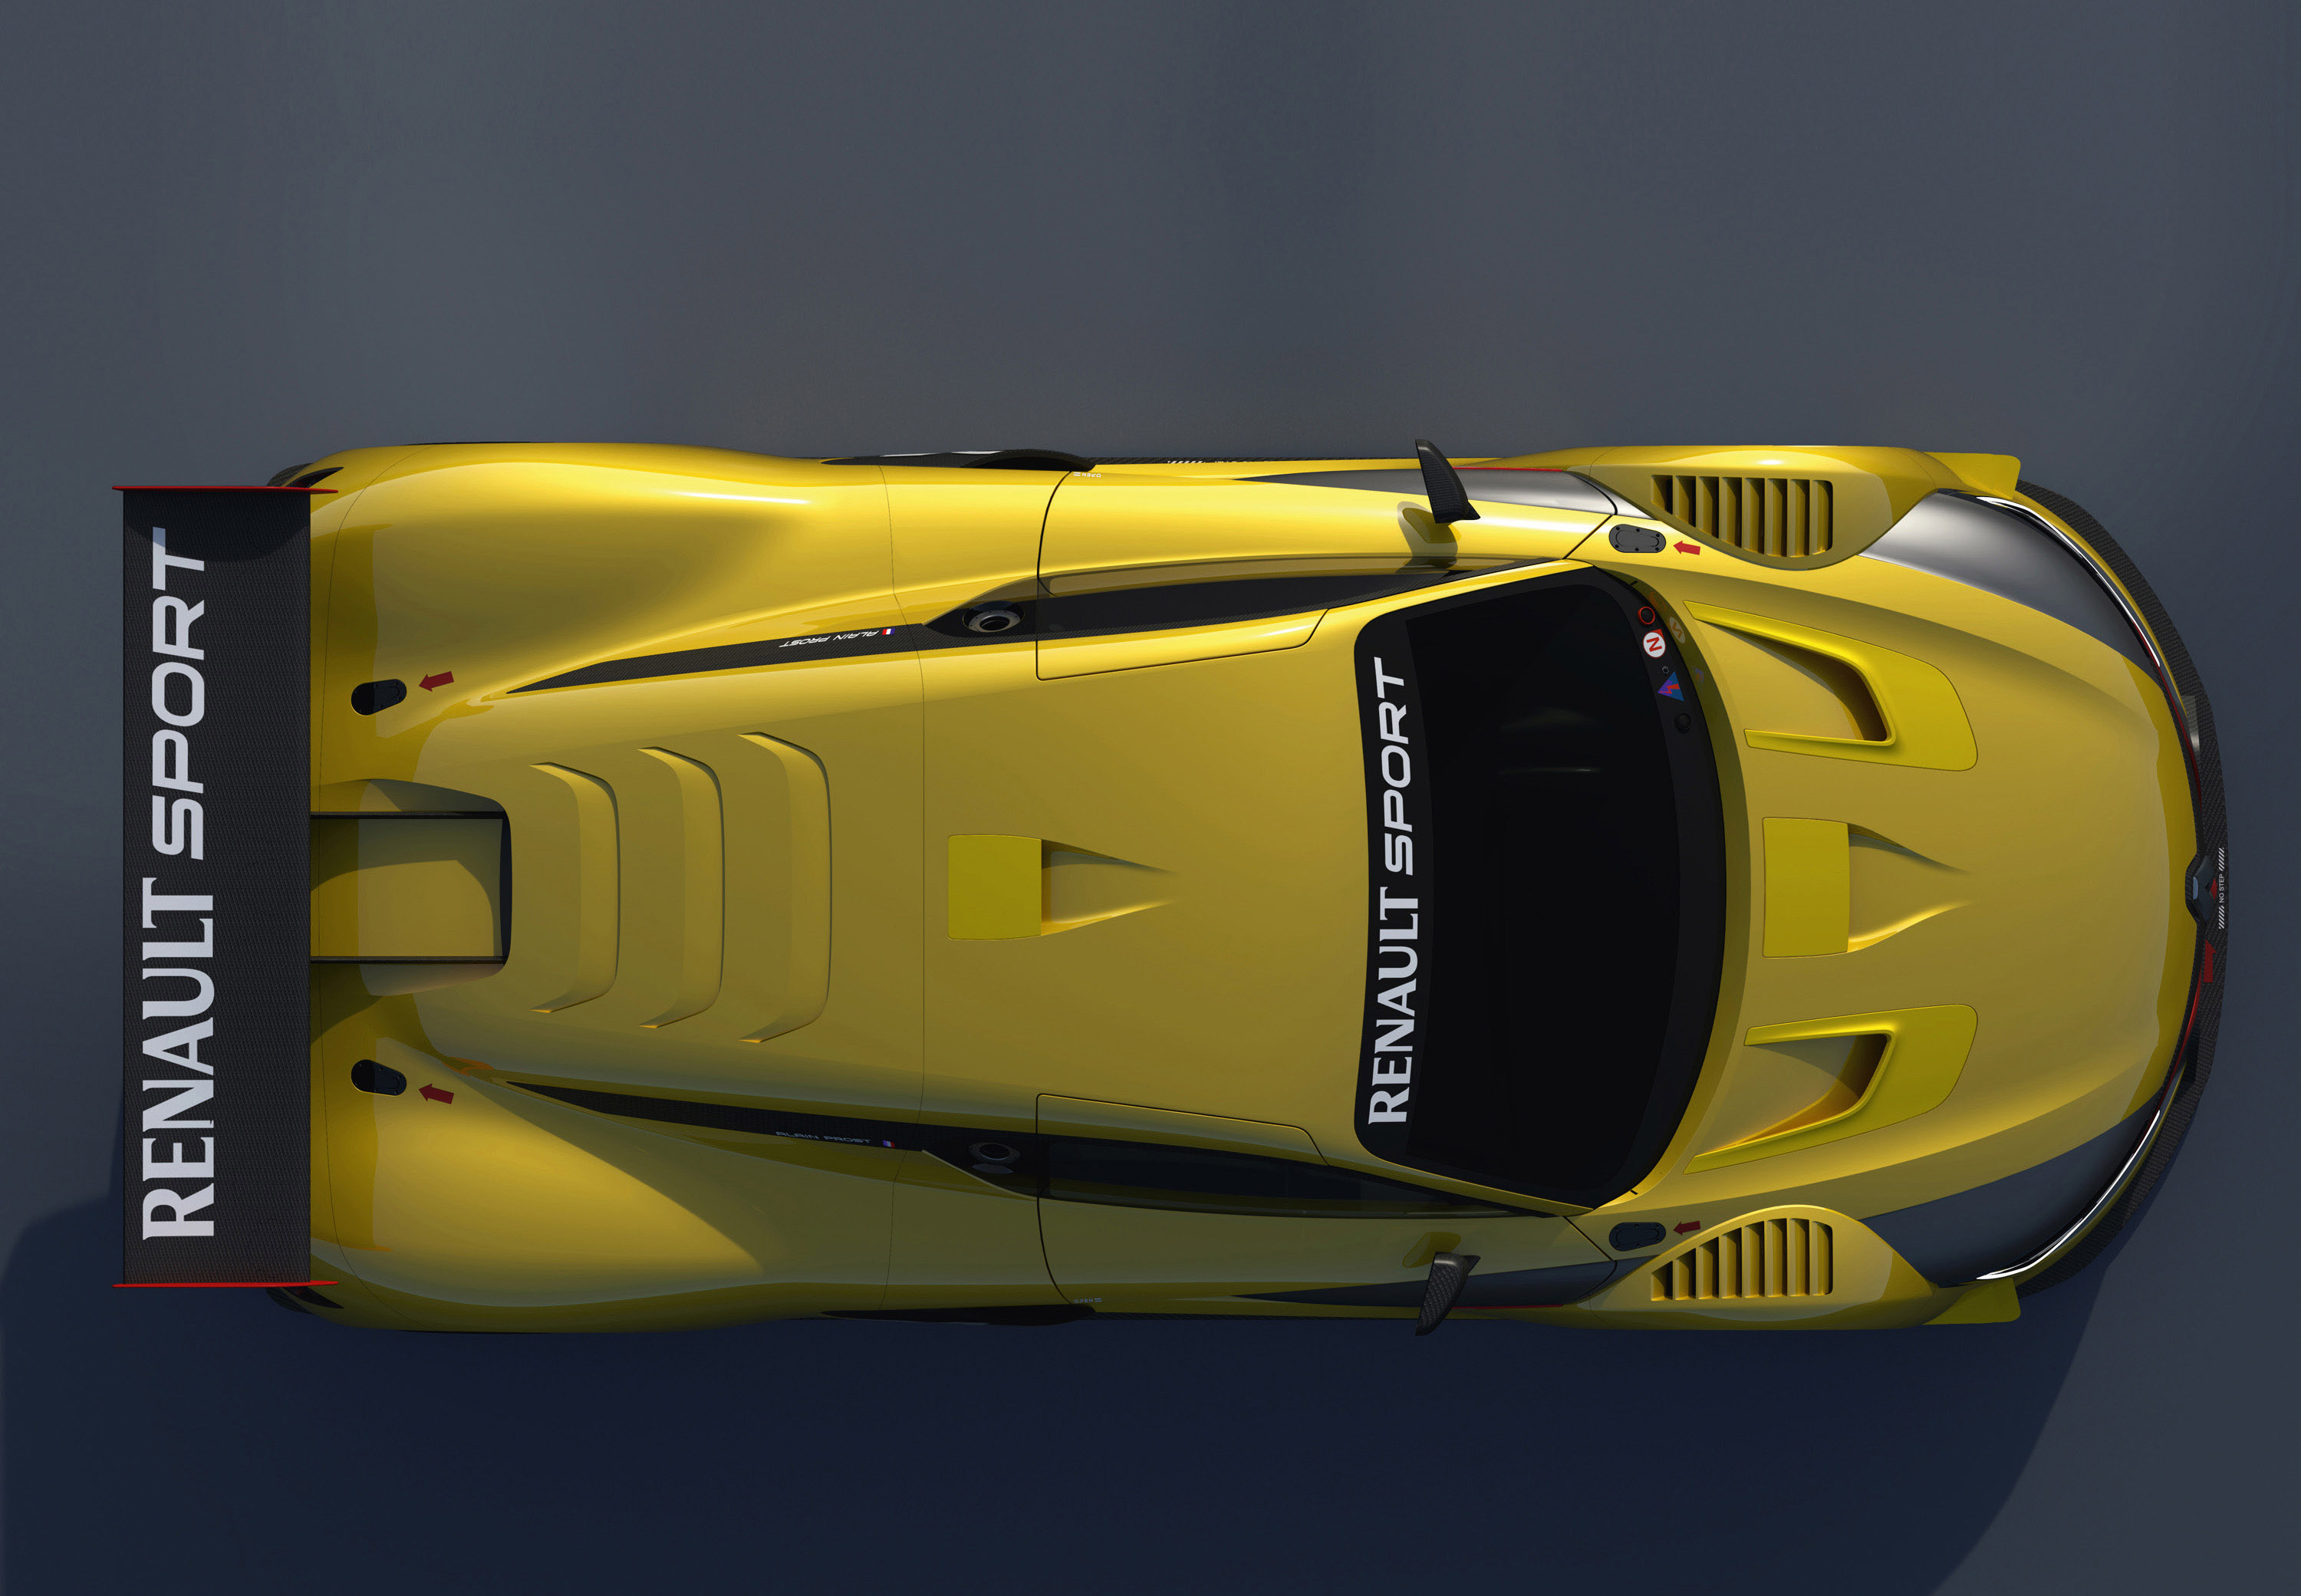 Renaultsport RS 01